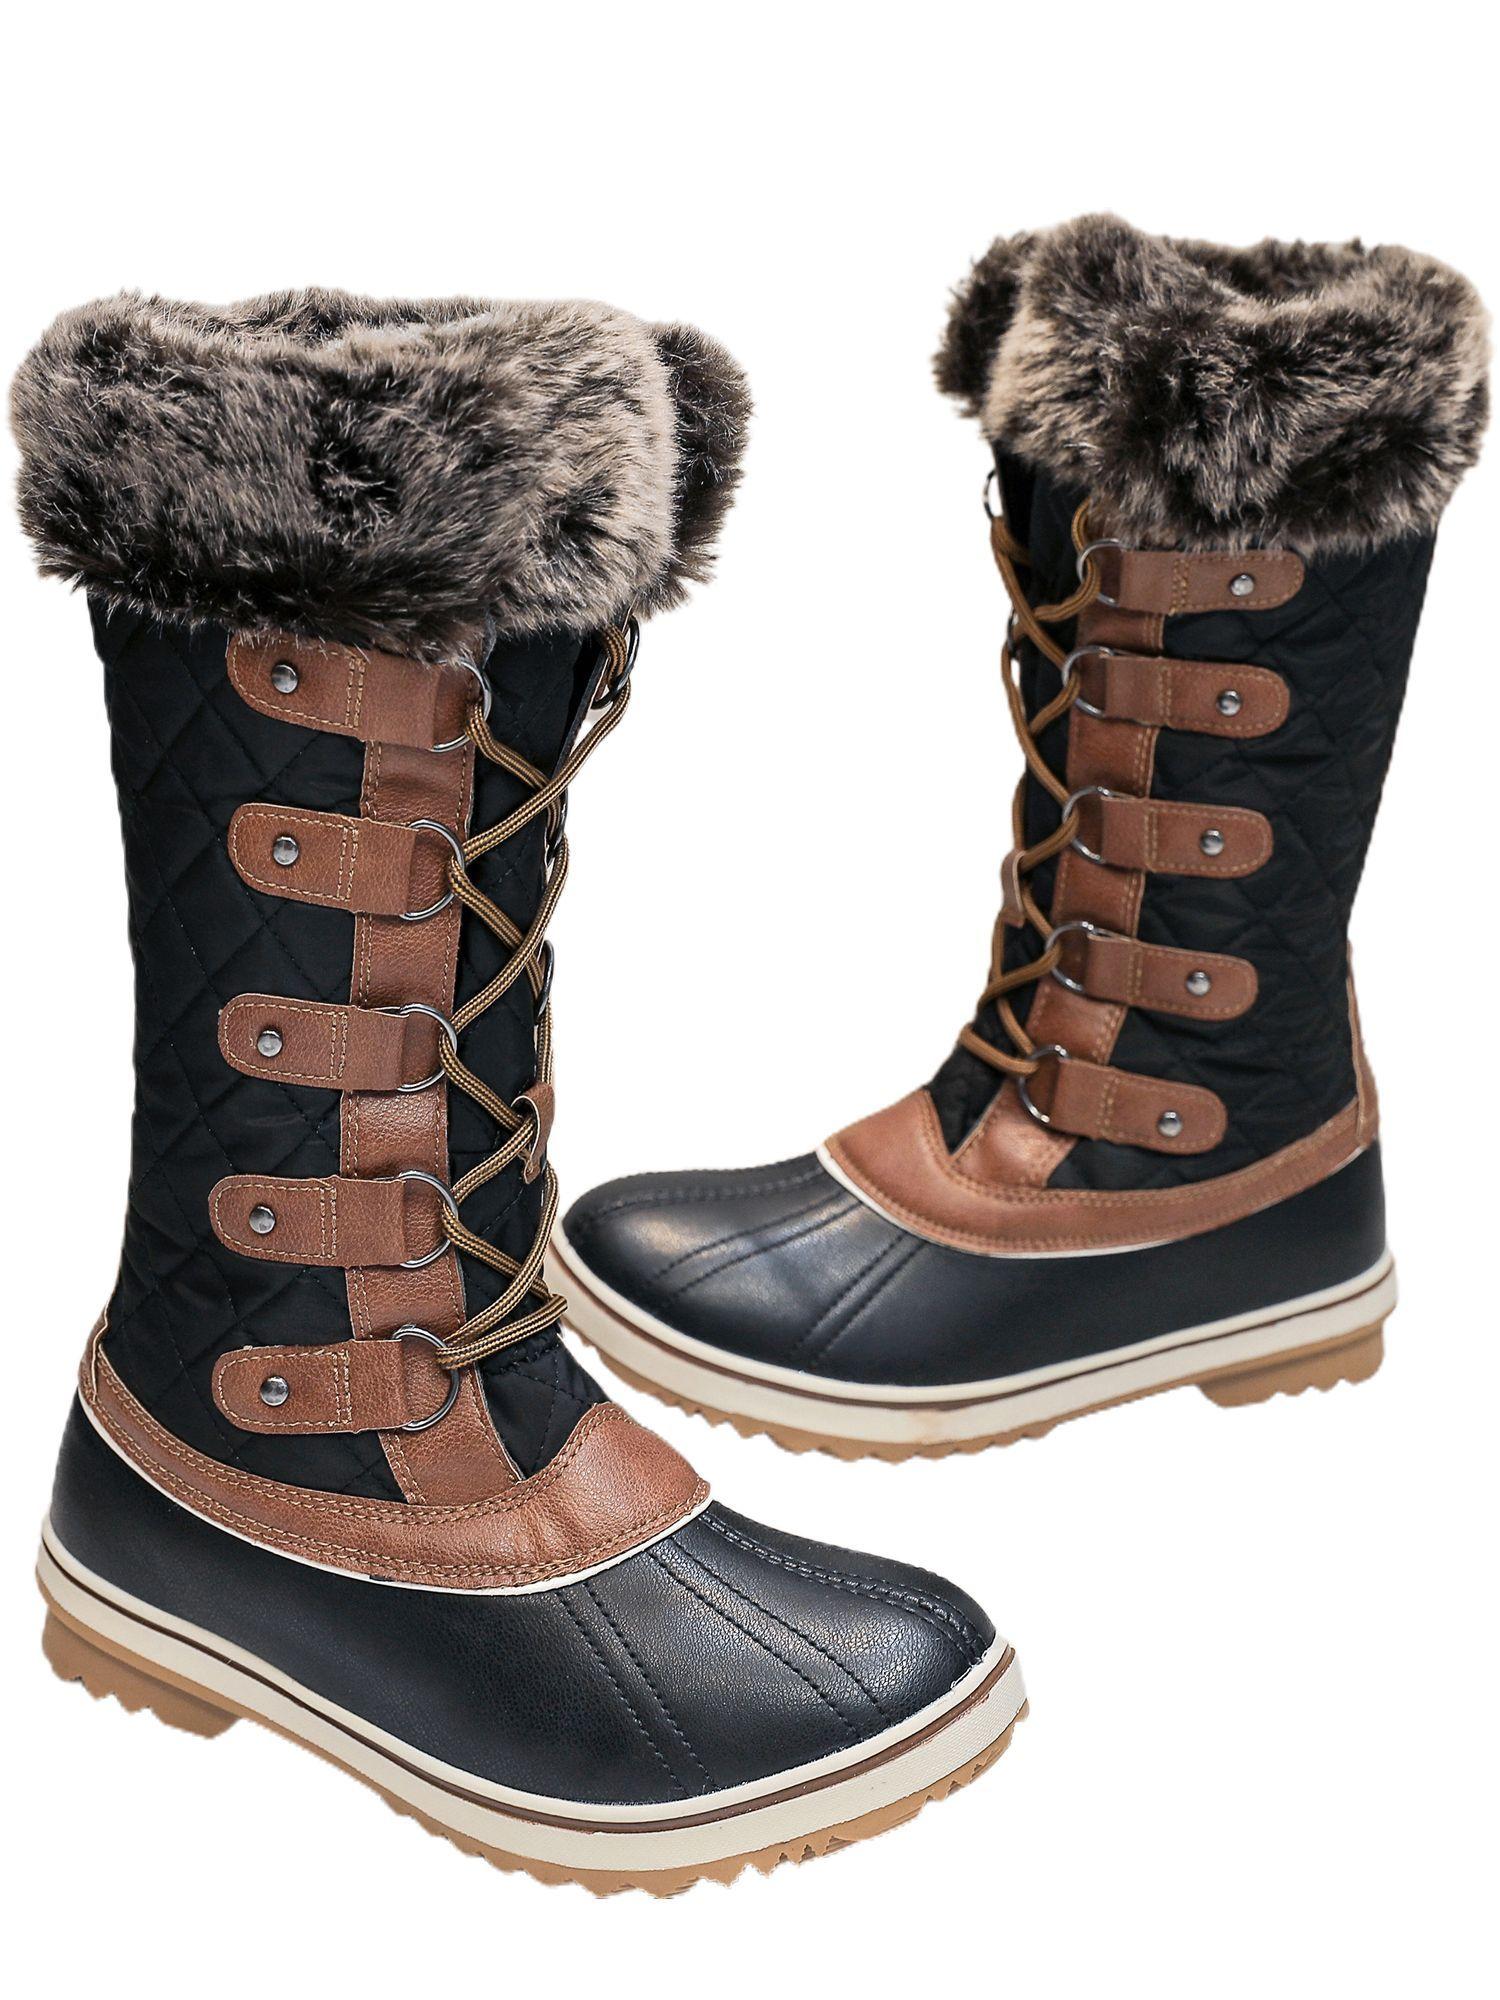 black and tan criss cross girls winter snow boots